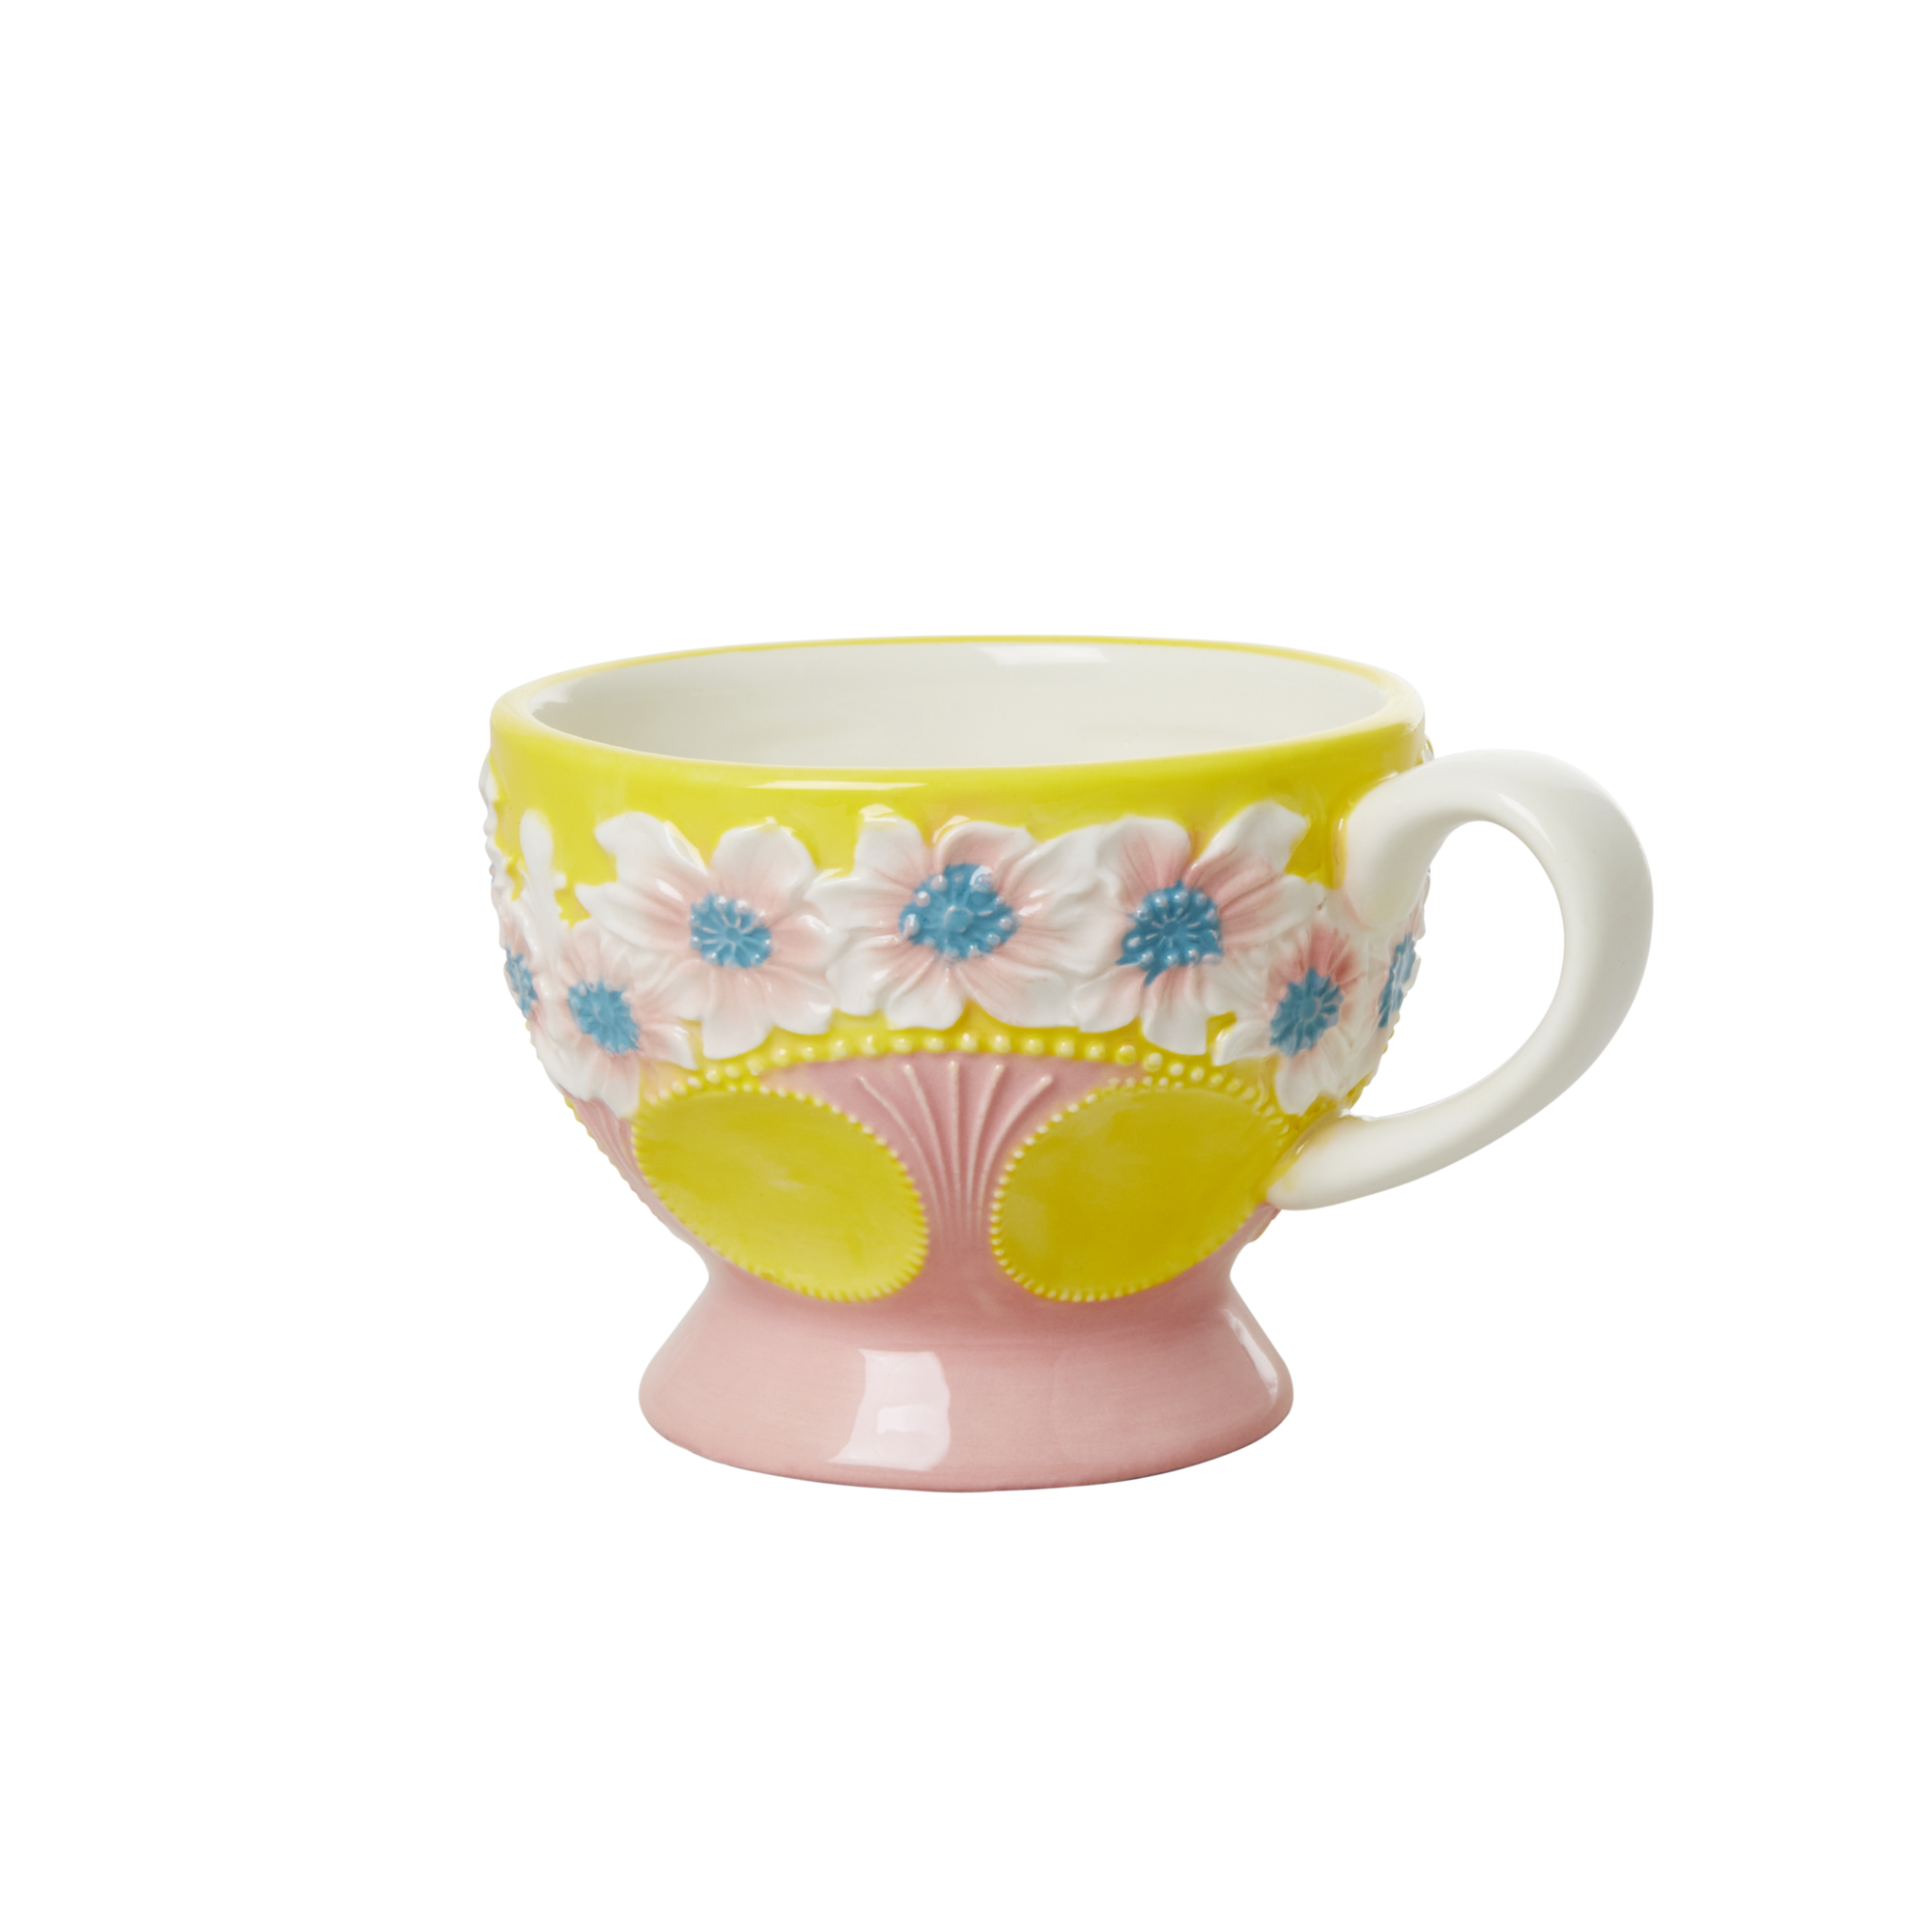 Rice - Ceramic Mug - Embossed Yellow Flower Design